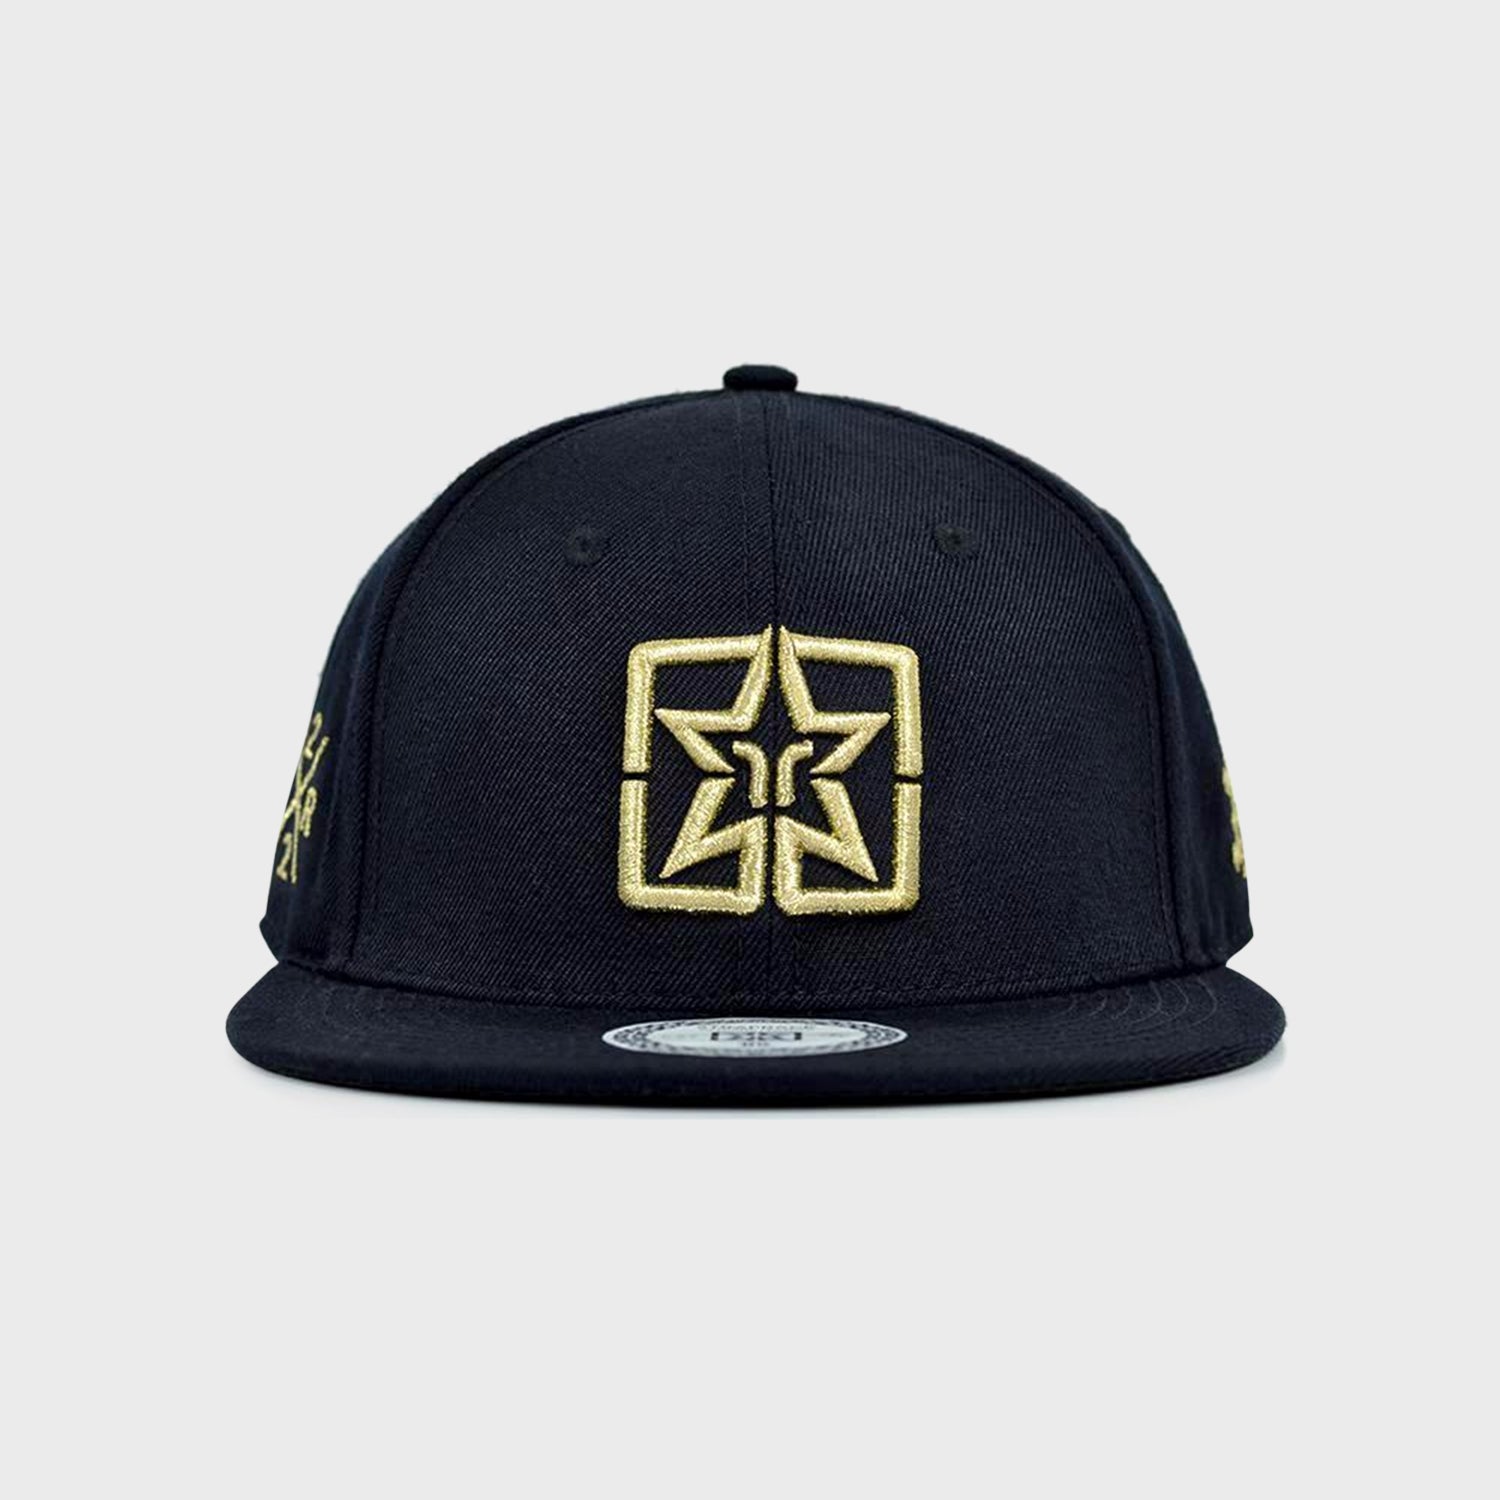 Emblem Snapback {Gold on Black}